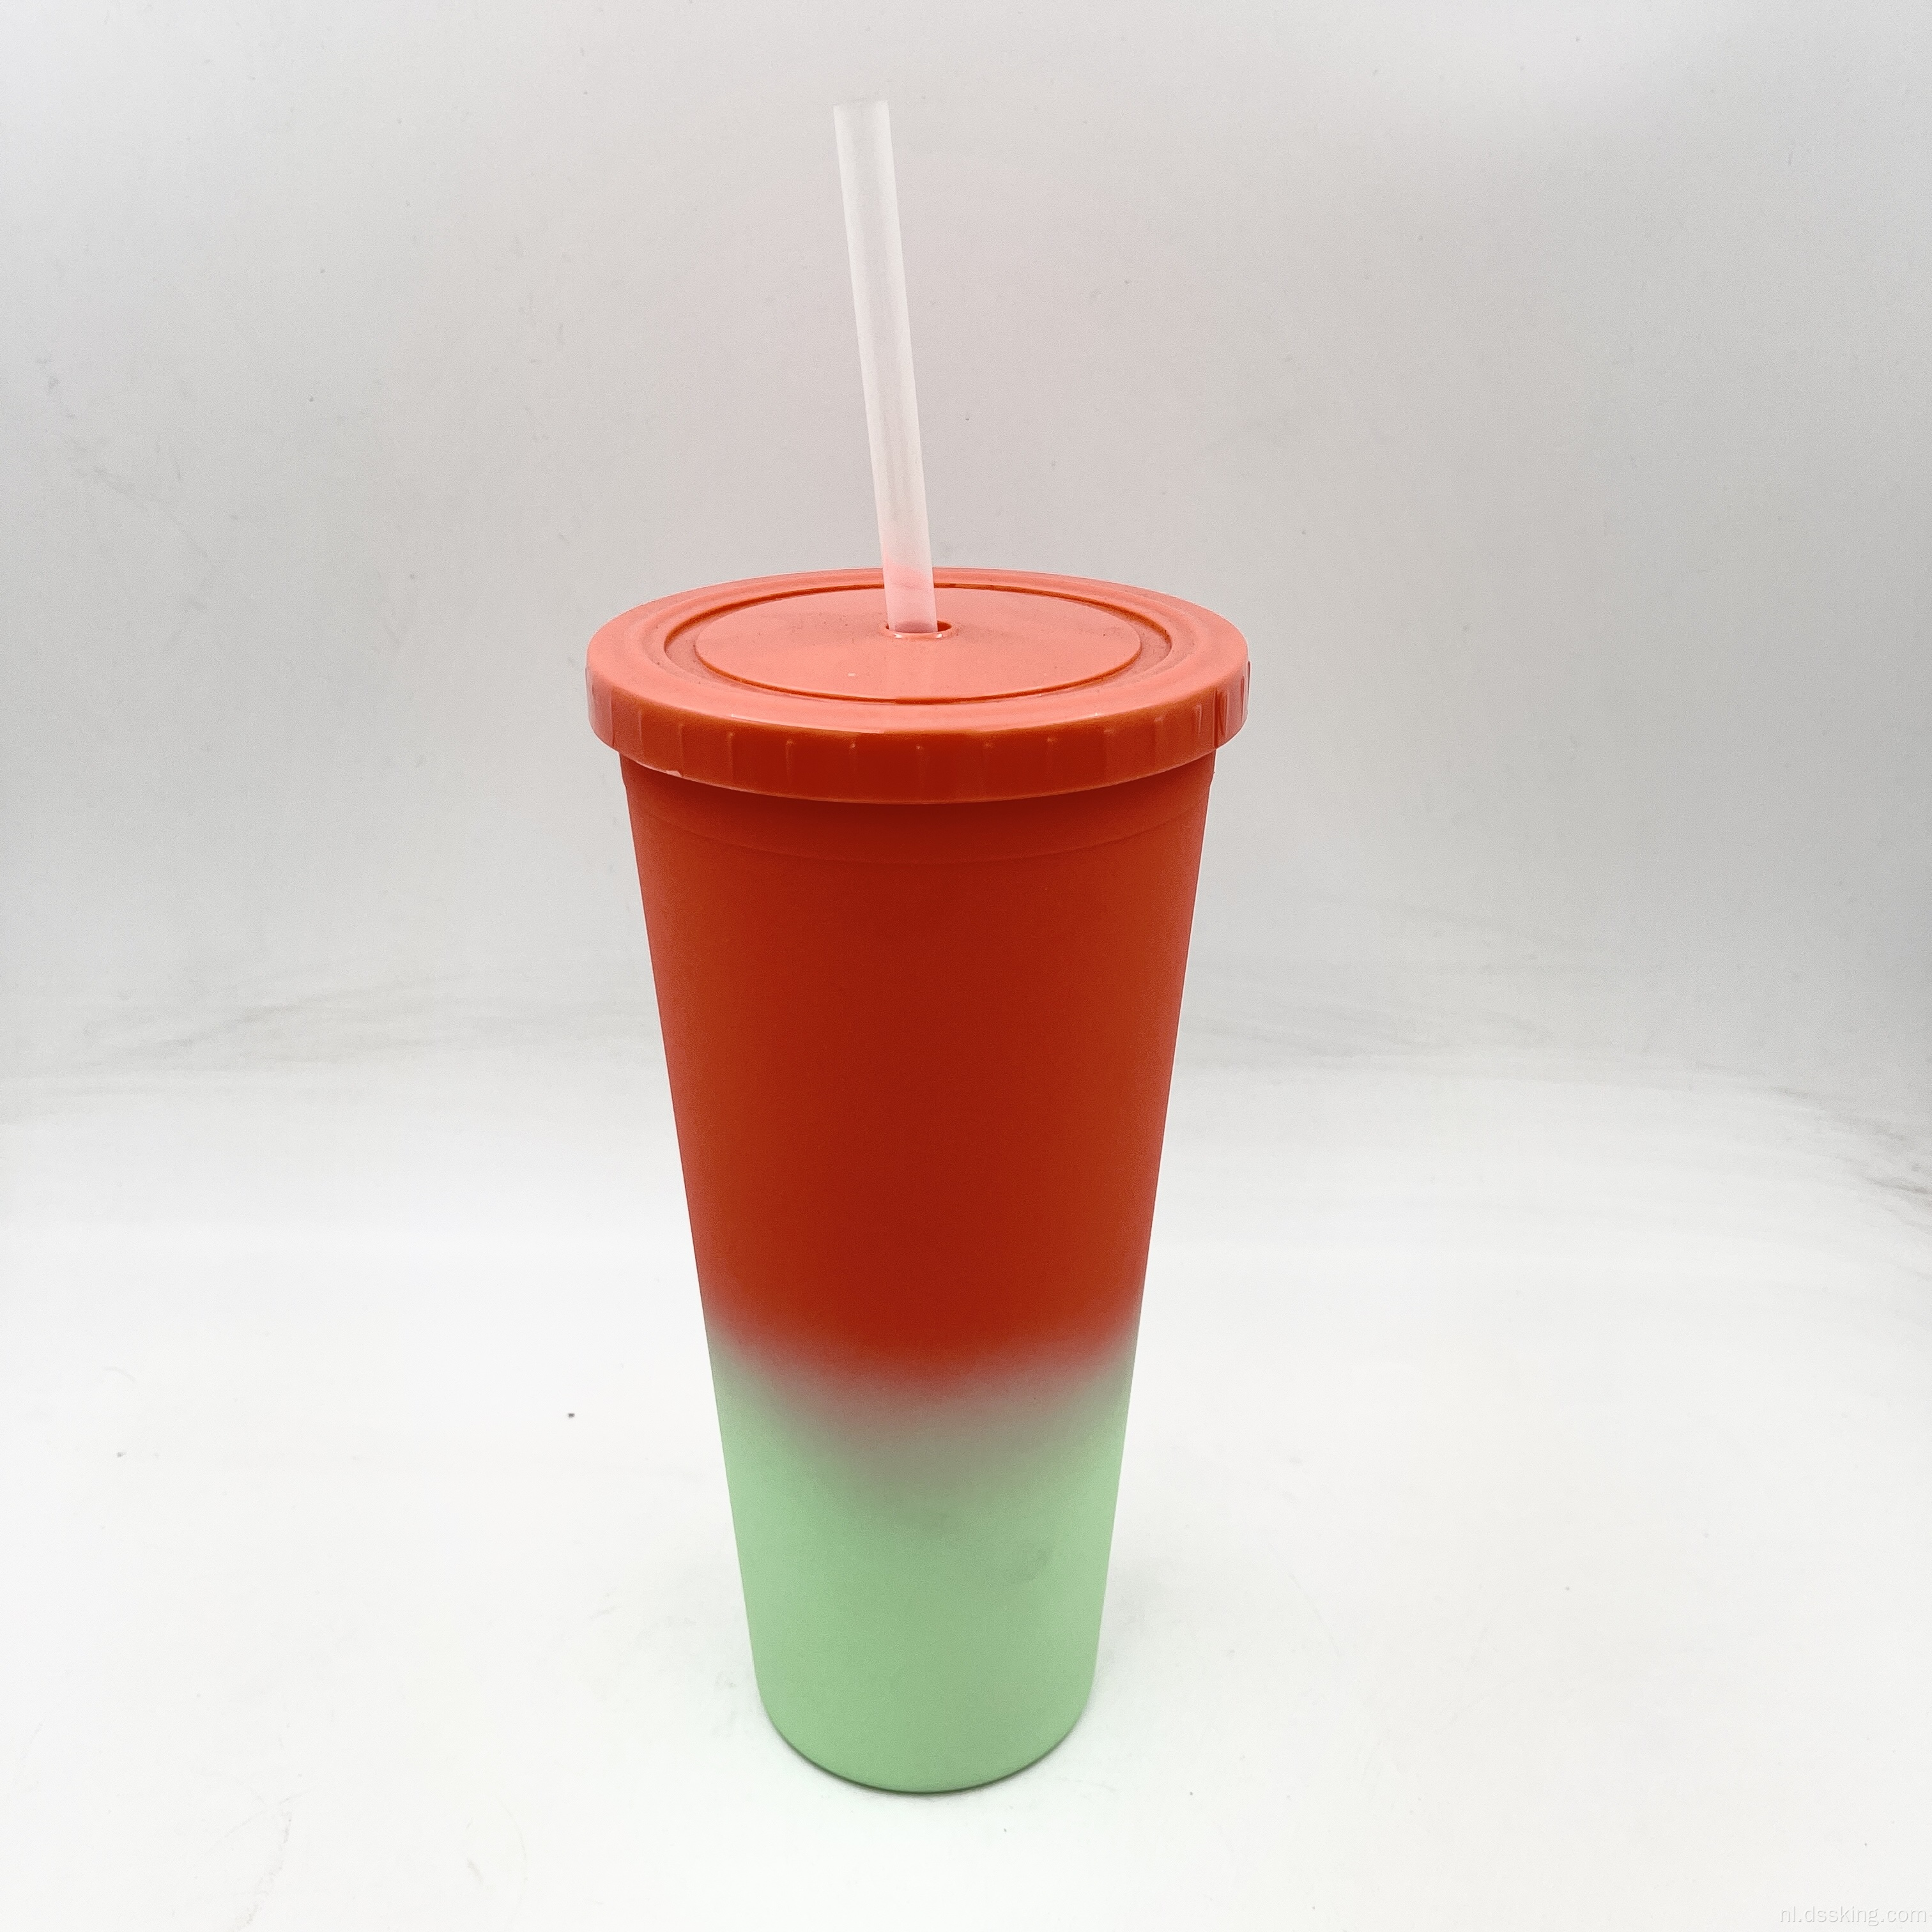 hete verkoop 22oz/650 ml/24oz plastic dubbele wandtuimelaar met kleurverandering tuimelaar met stro